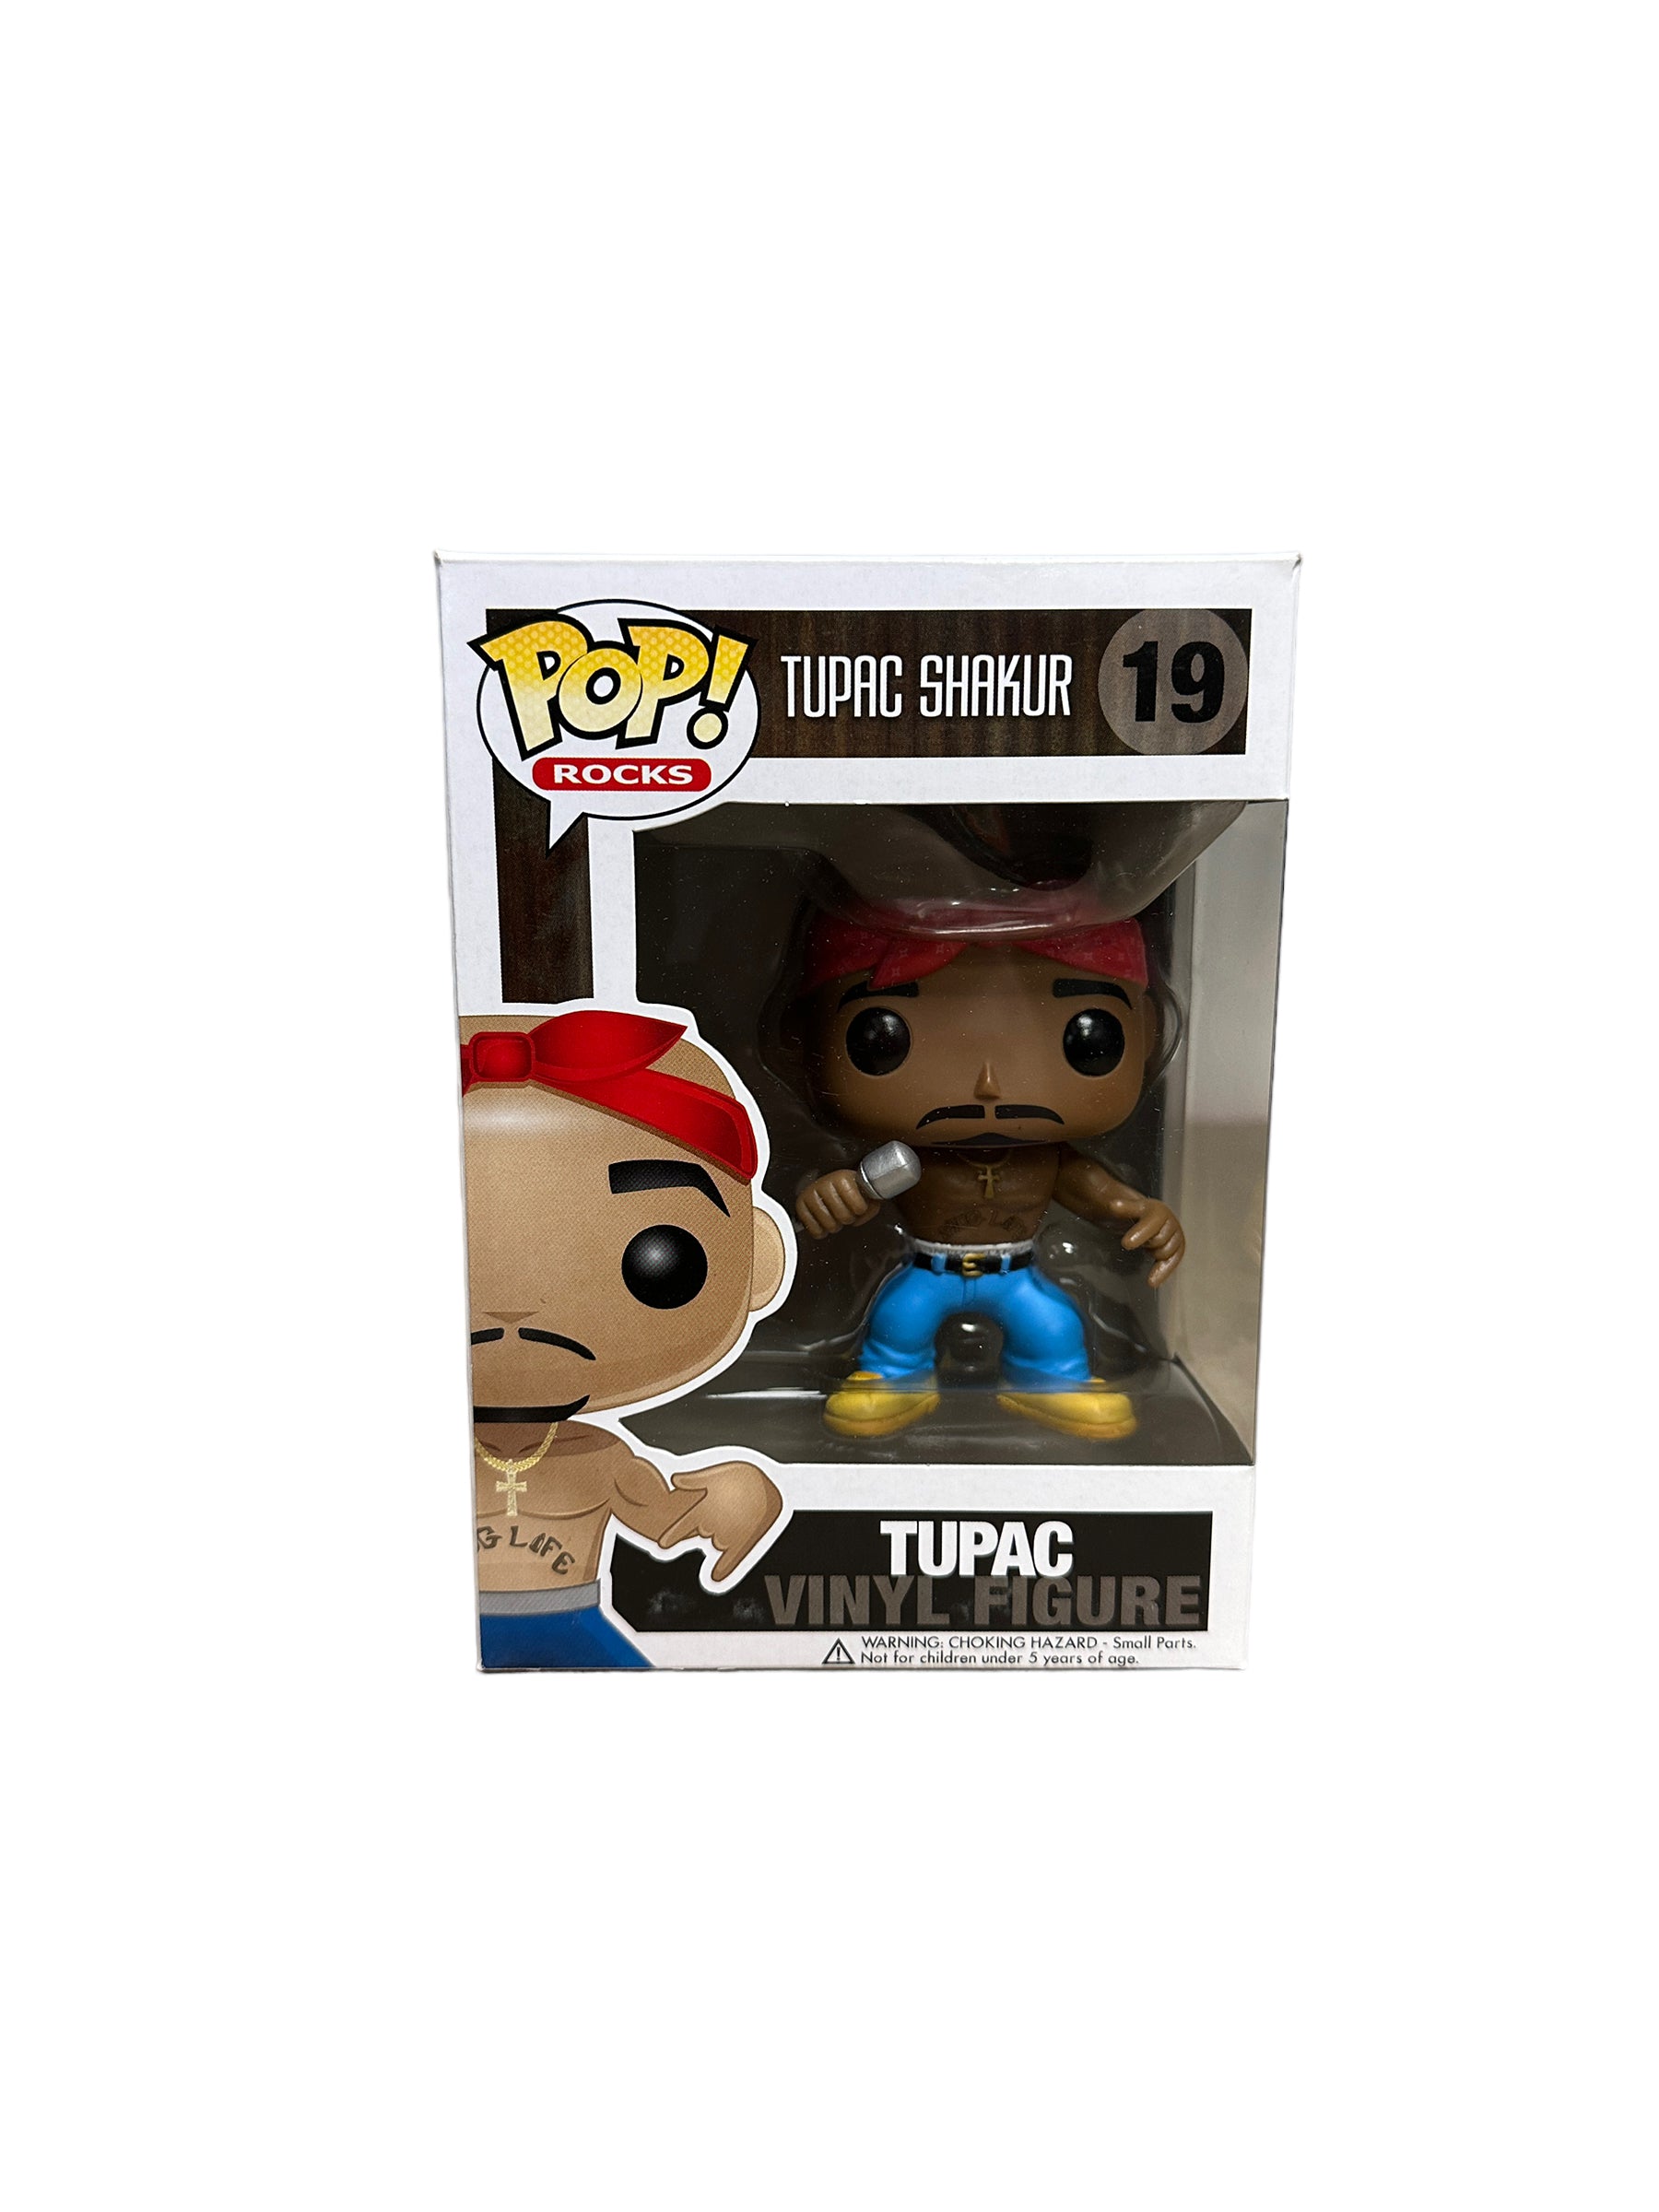 Tupac #19 Funko Pop! - Rocks - 2011 Pop! - Condition 8.5/10